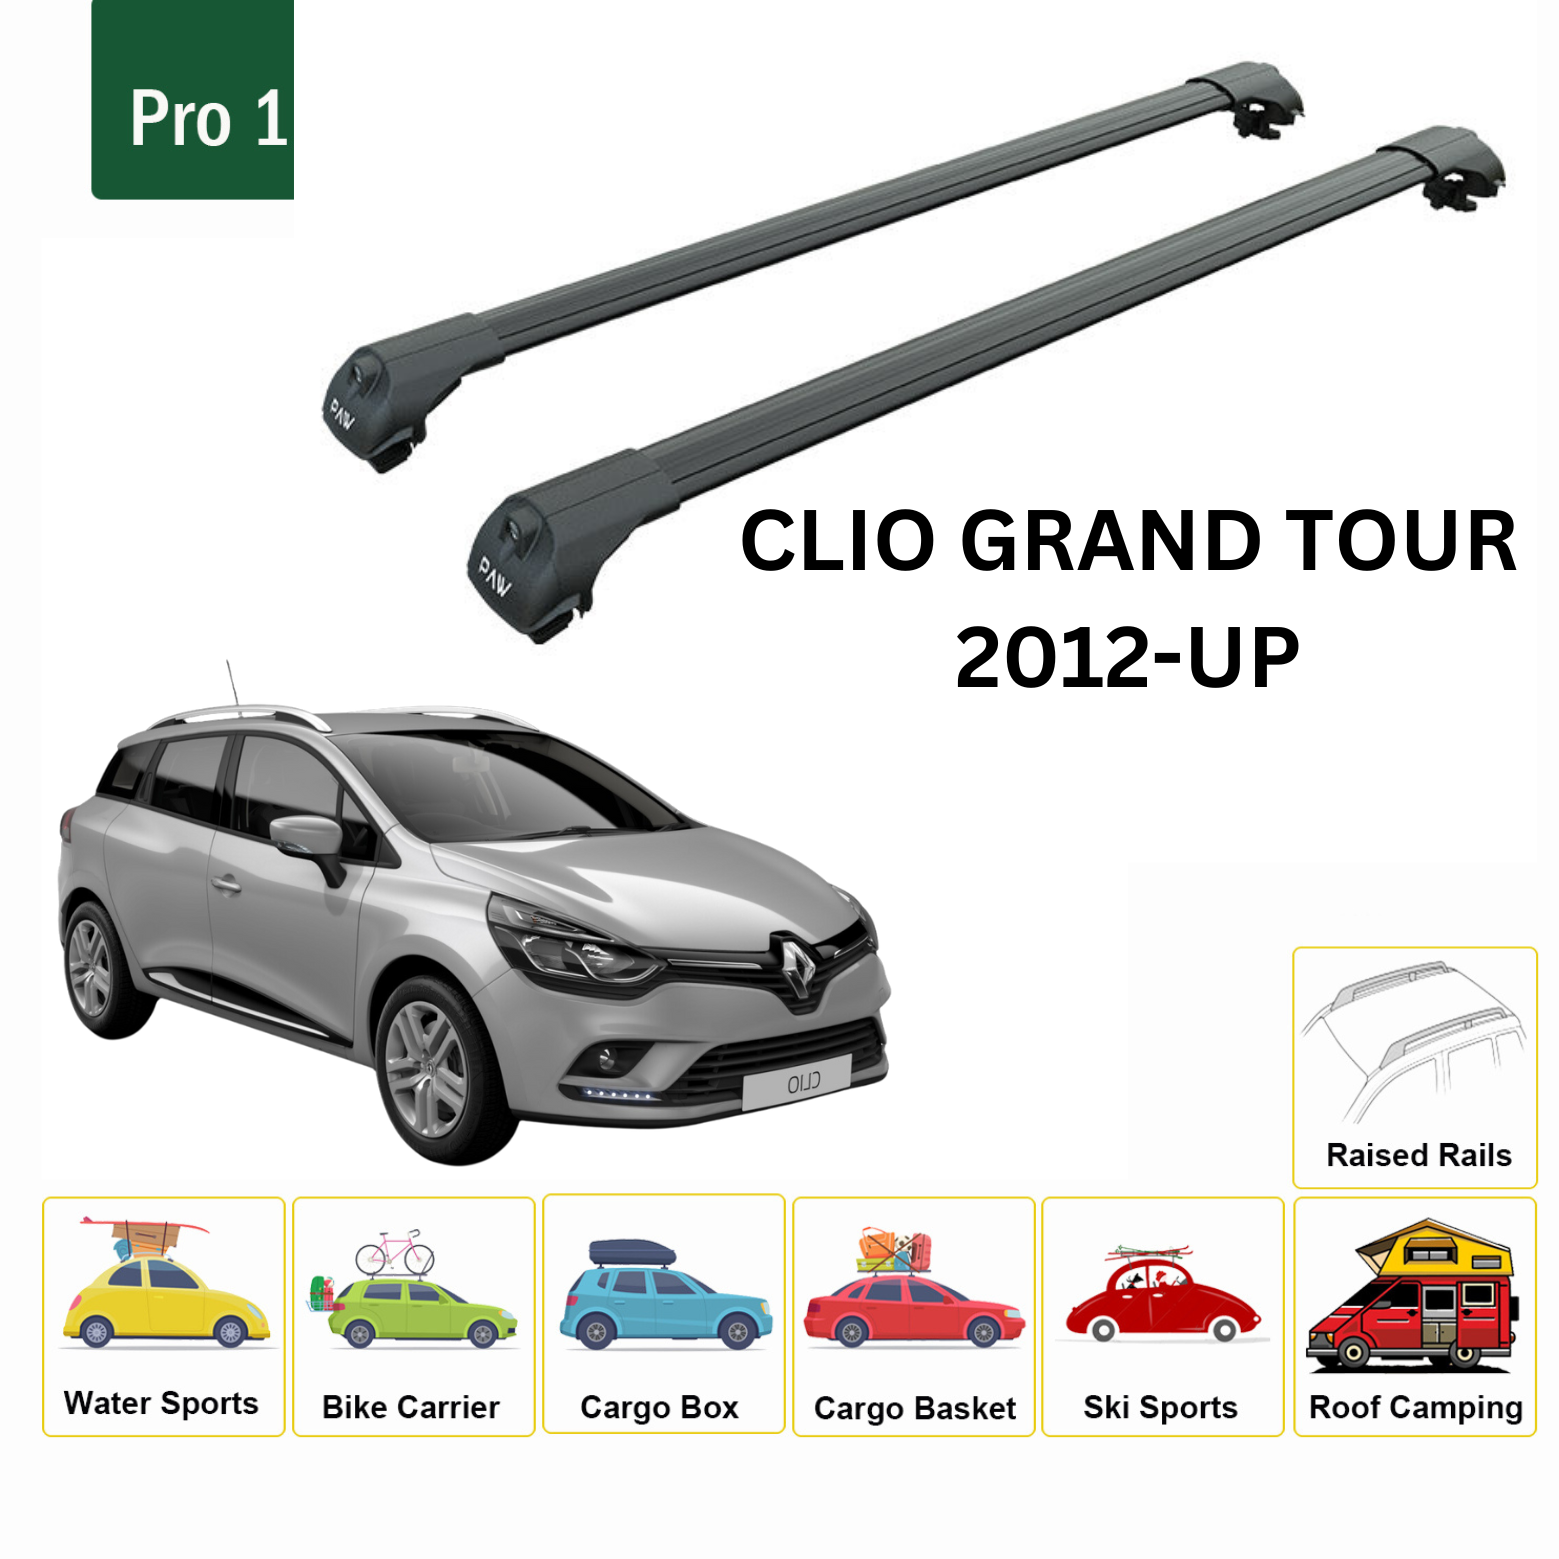 For Renault Clio Grand Tour 2012-Up Roof Rack System, Aluminium Cross Bar, Metal Bracket, Normal Roof, Black